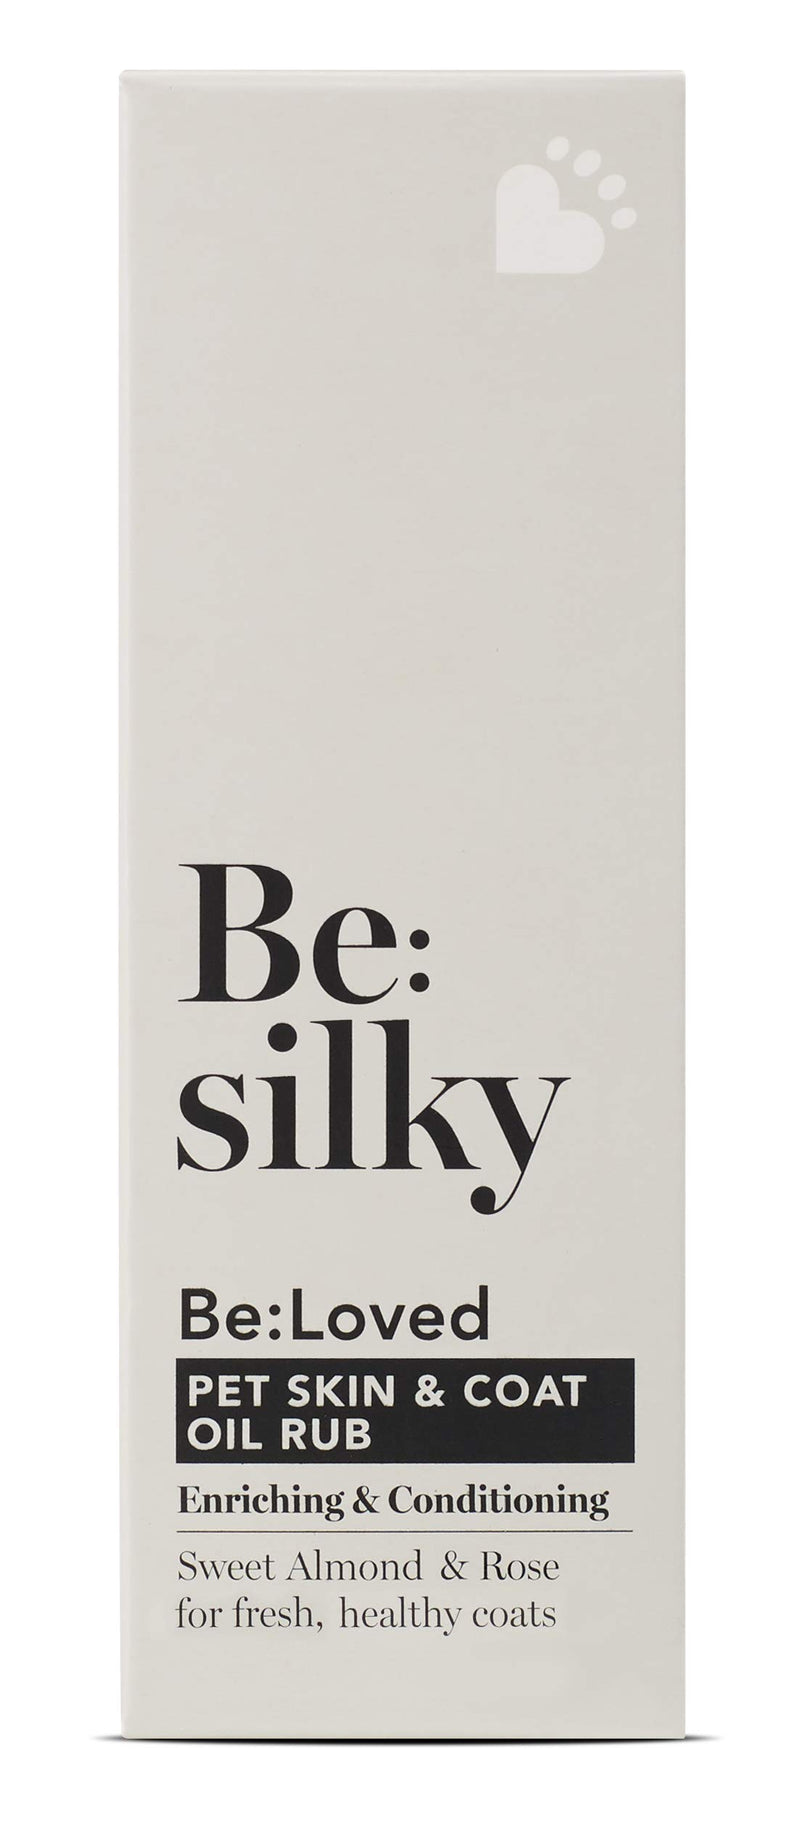 Be:Loved silky Pet Skin & Coat Oil Rub Enriching & Conditioning, Natural Ingredients Sweet Almond & Vitamin E Oils - 50ml, green - PawsPlanet Australia